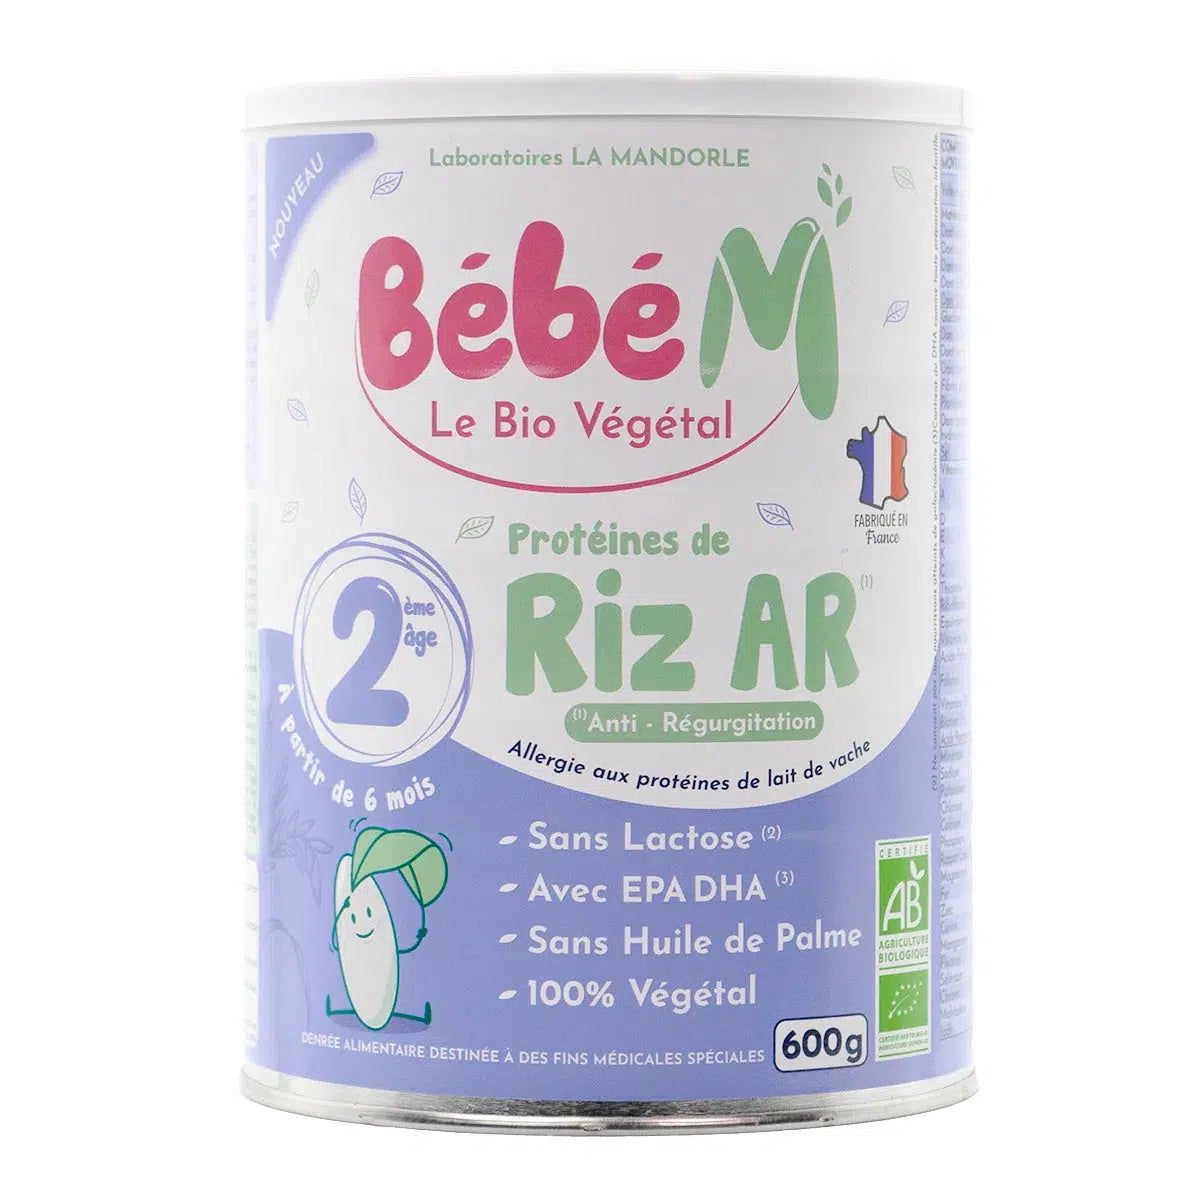 Bebe M (Bebe Mandorle) Organic Anti-Reflux Rice-Based Formula - Stage 2 (6+ months) | Organic Baby Formula 